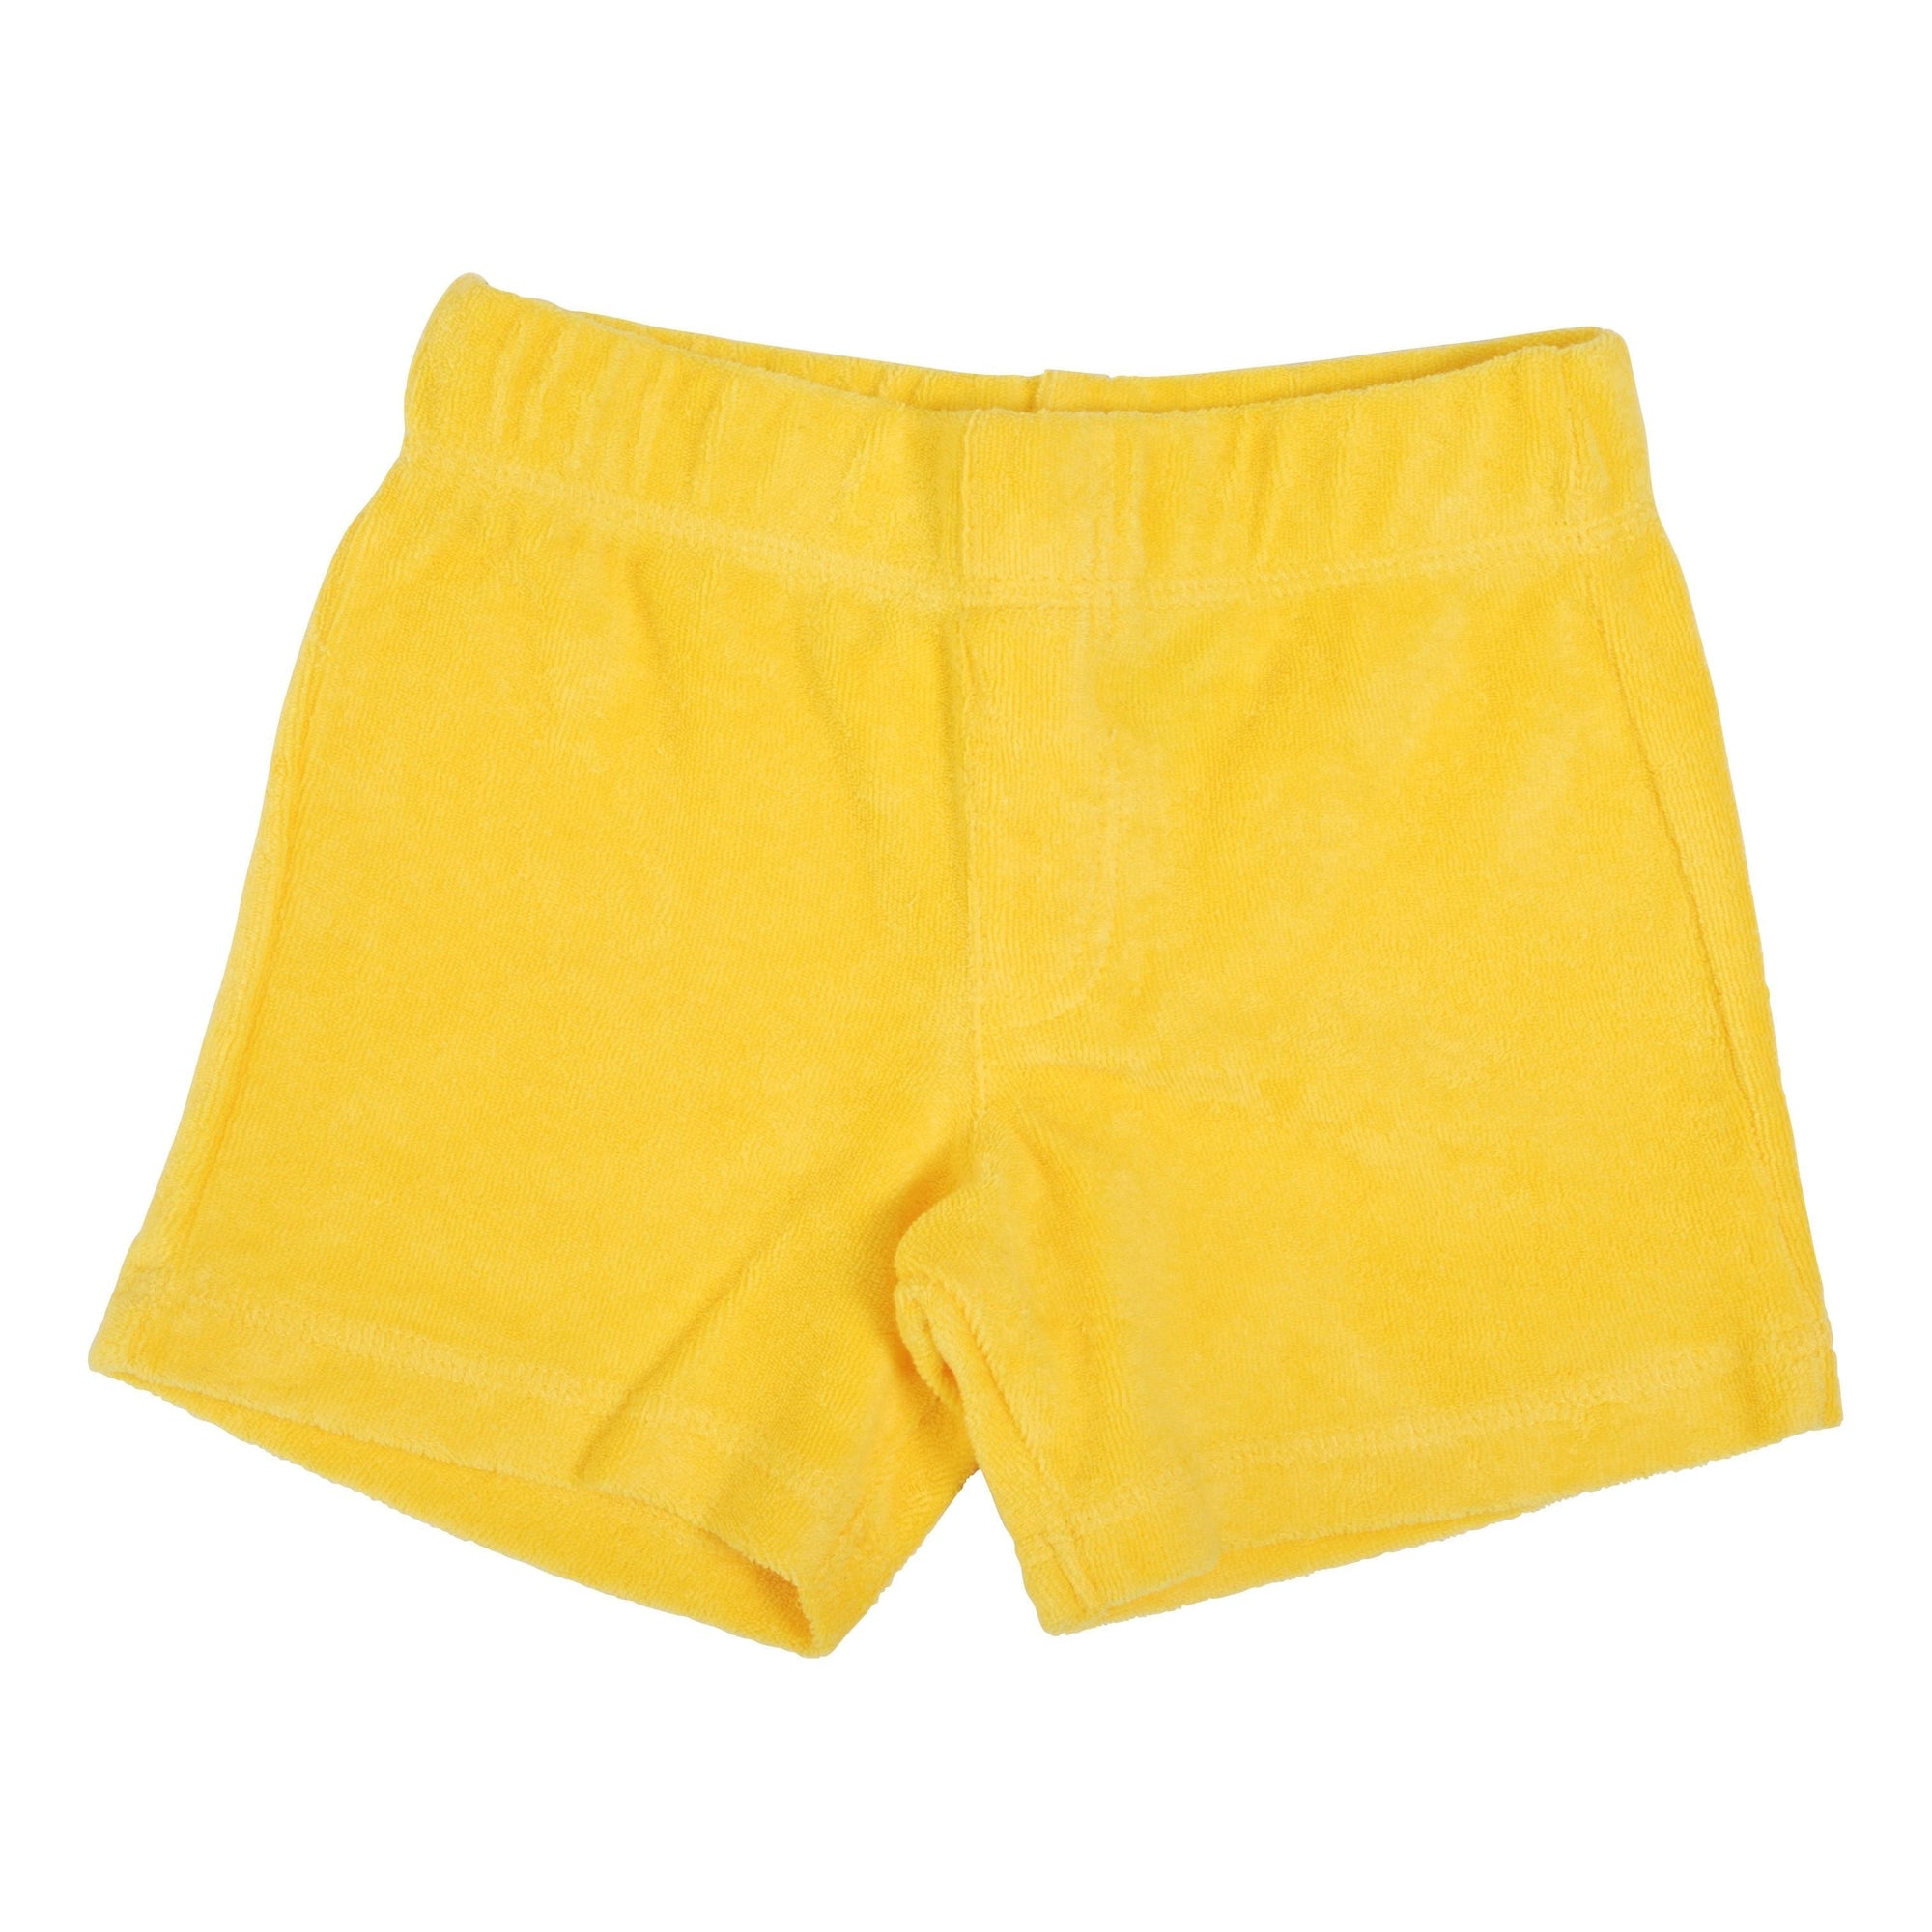 Aspen Gold Terry Shorts - 2 Left Size 12-14 years-Duns Sweden-Modern Rascals